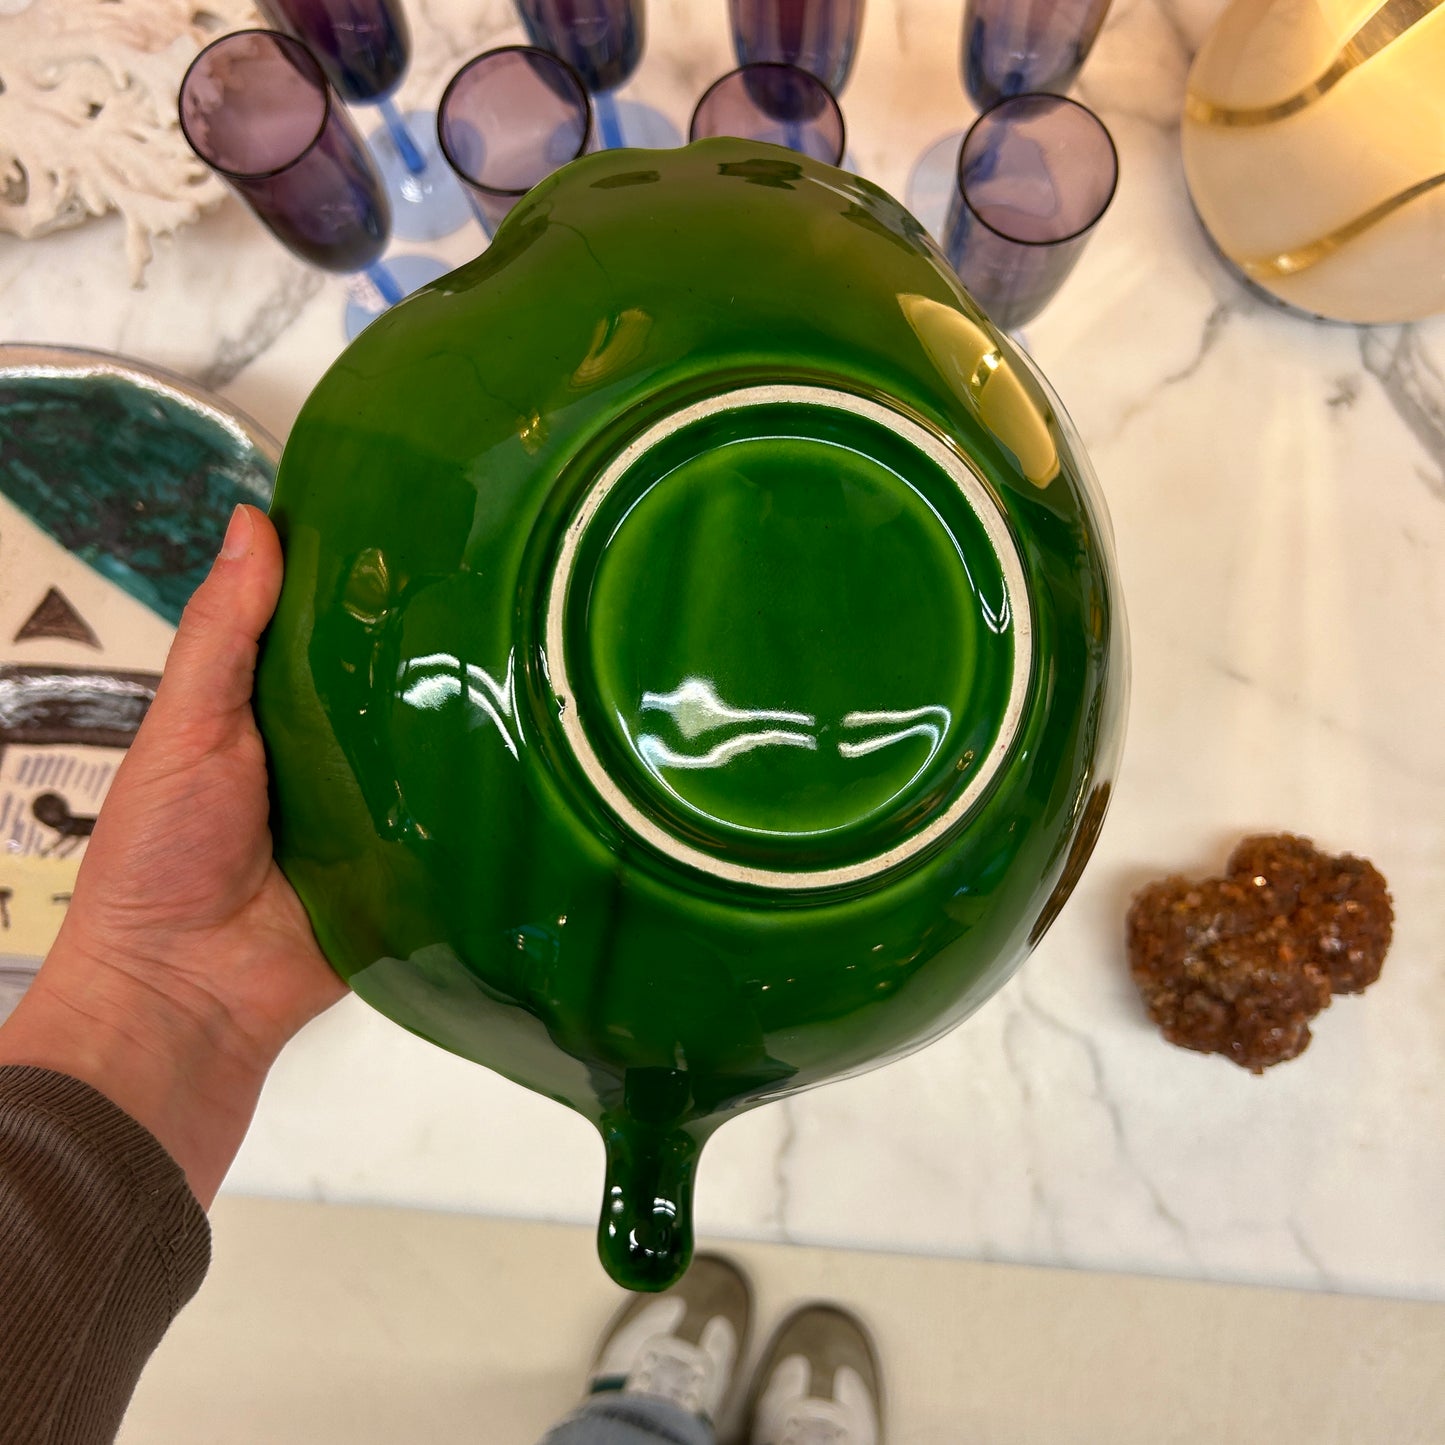 Green artichoke ceramic bowl